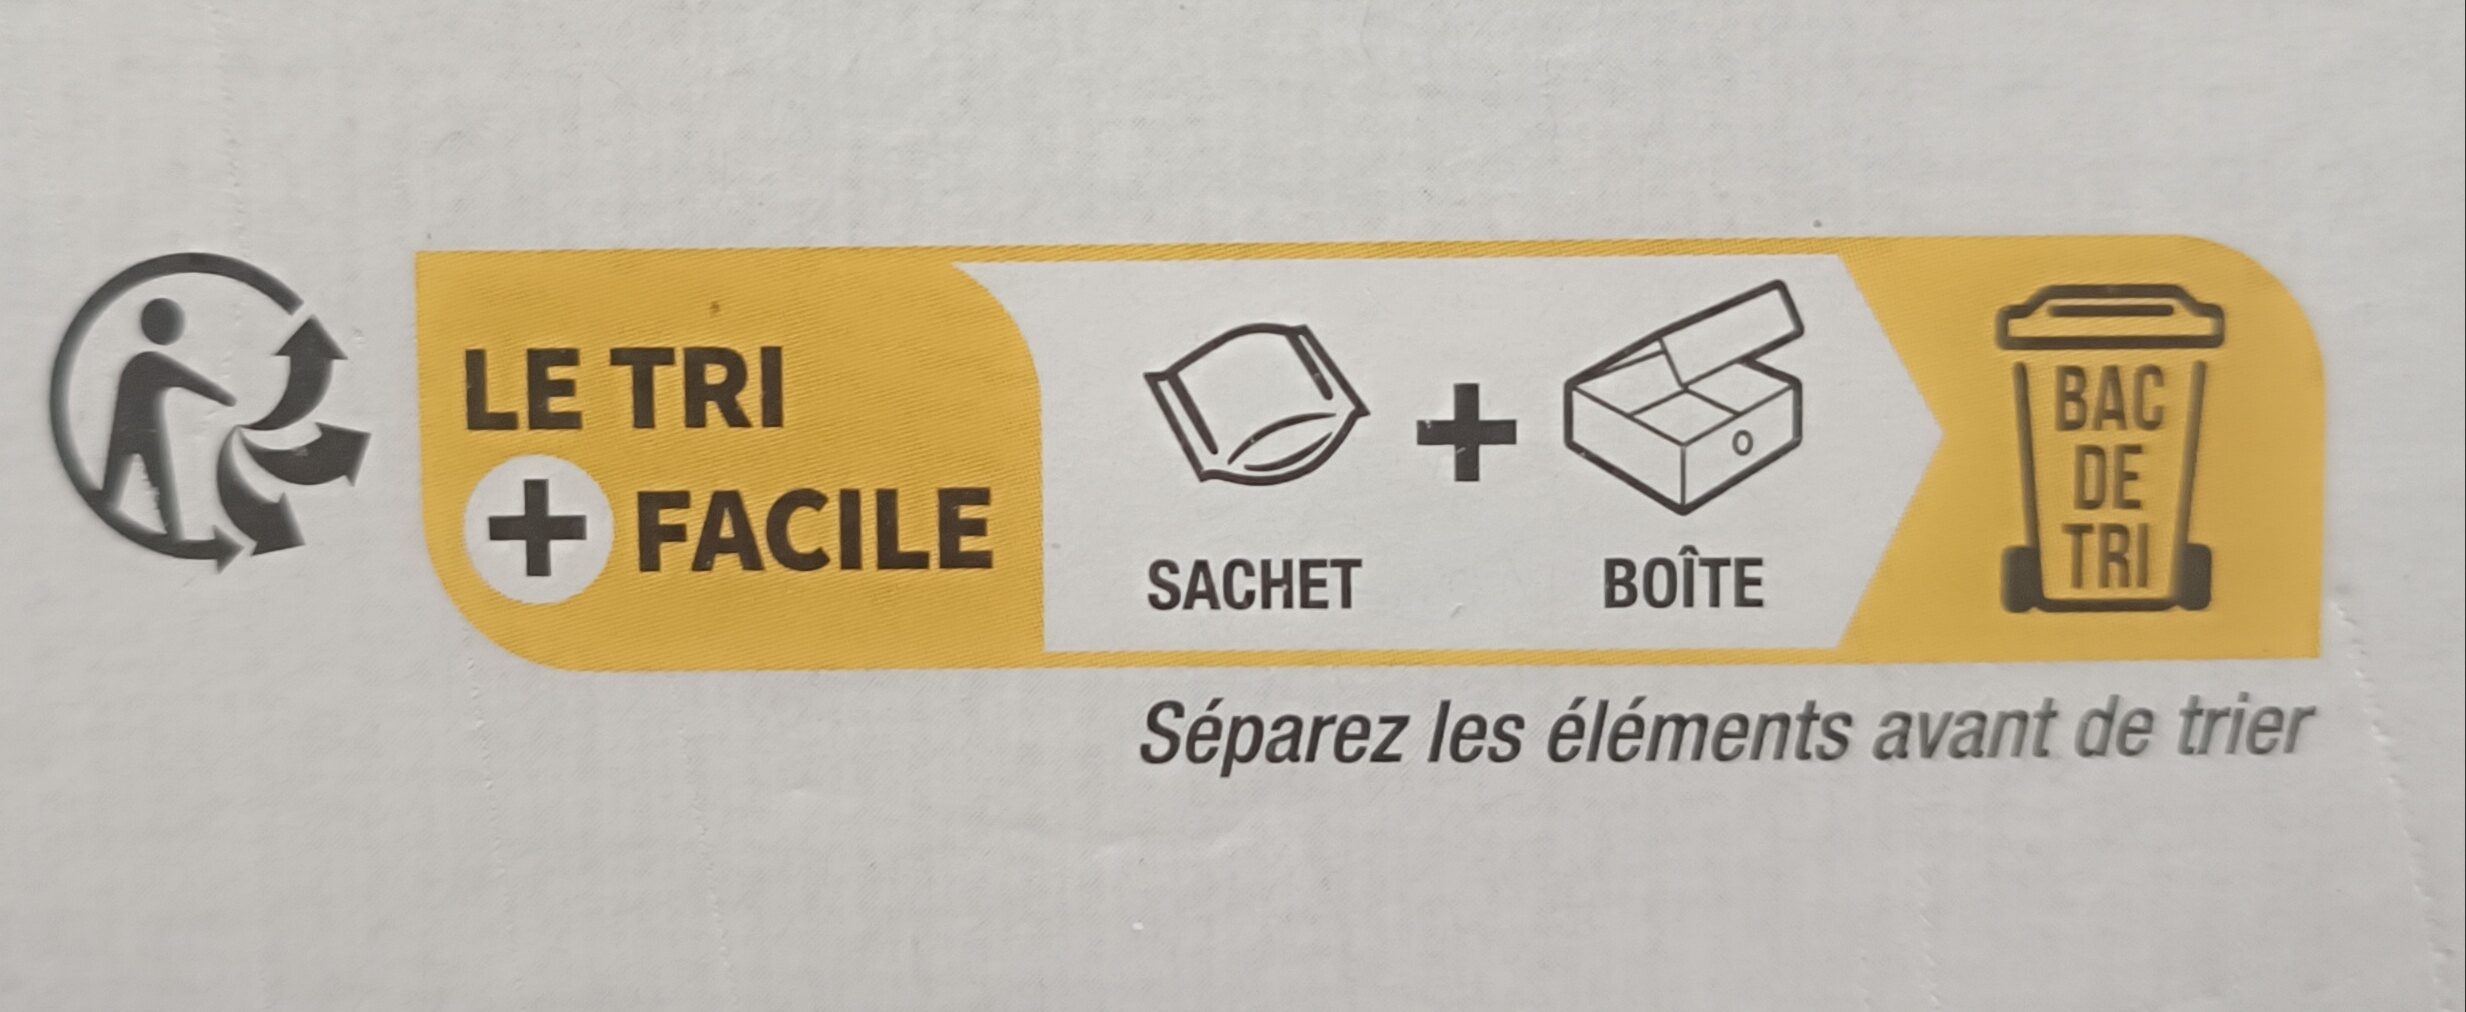 Madeleines Choco Noir - Instruction de recyclage et/ou informations d'emballage